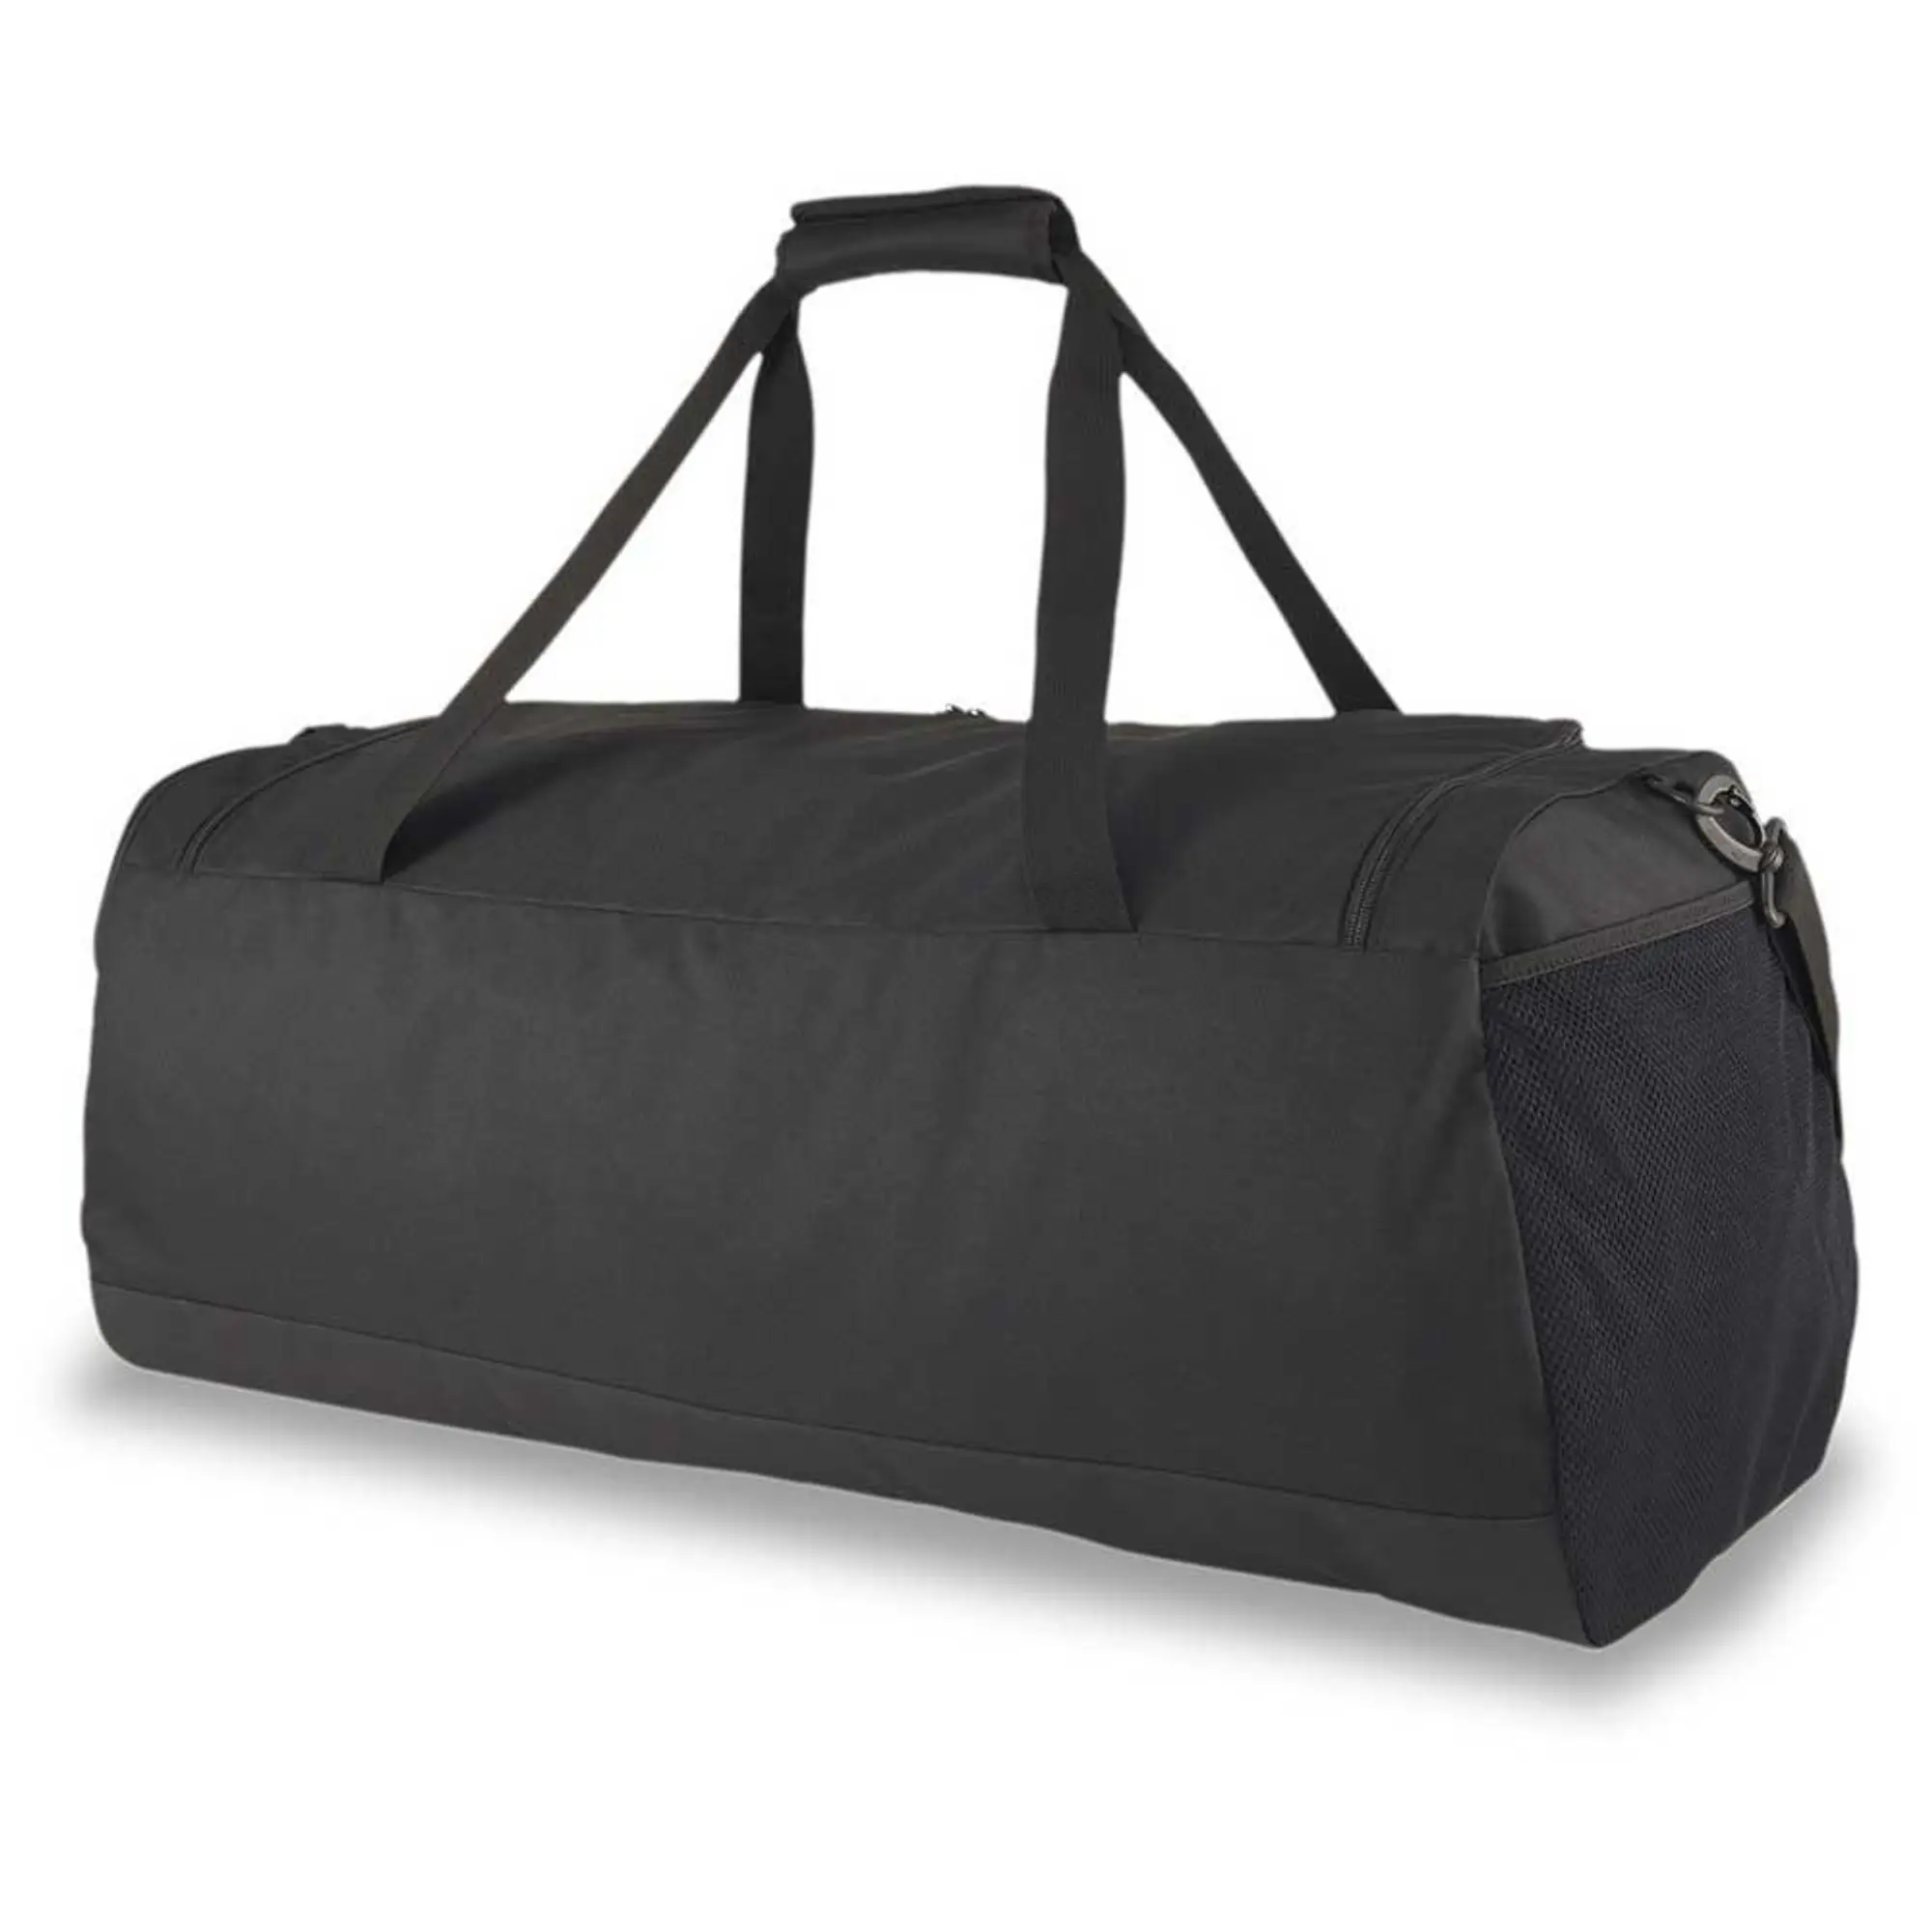 PUMA Teamgoal Large Duffel Bag, Black